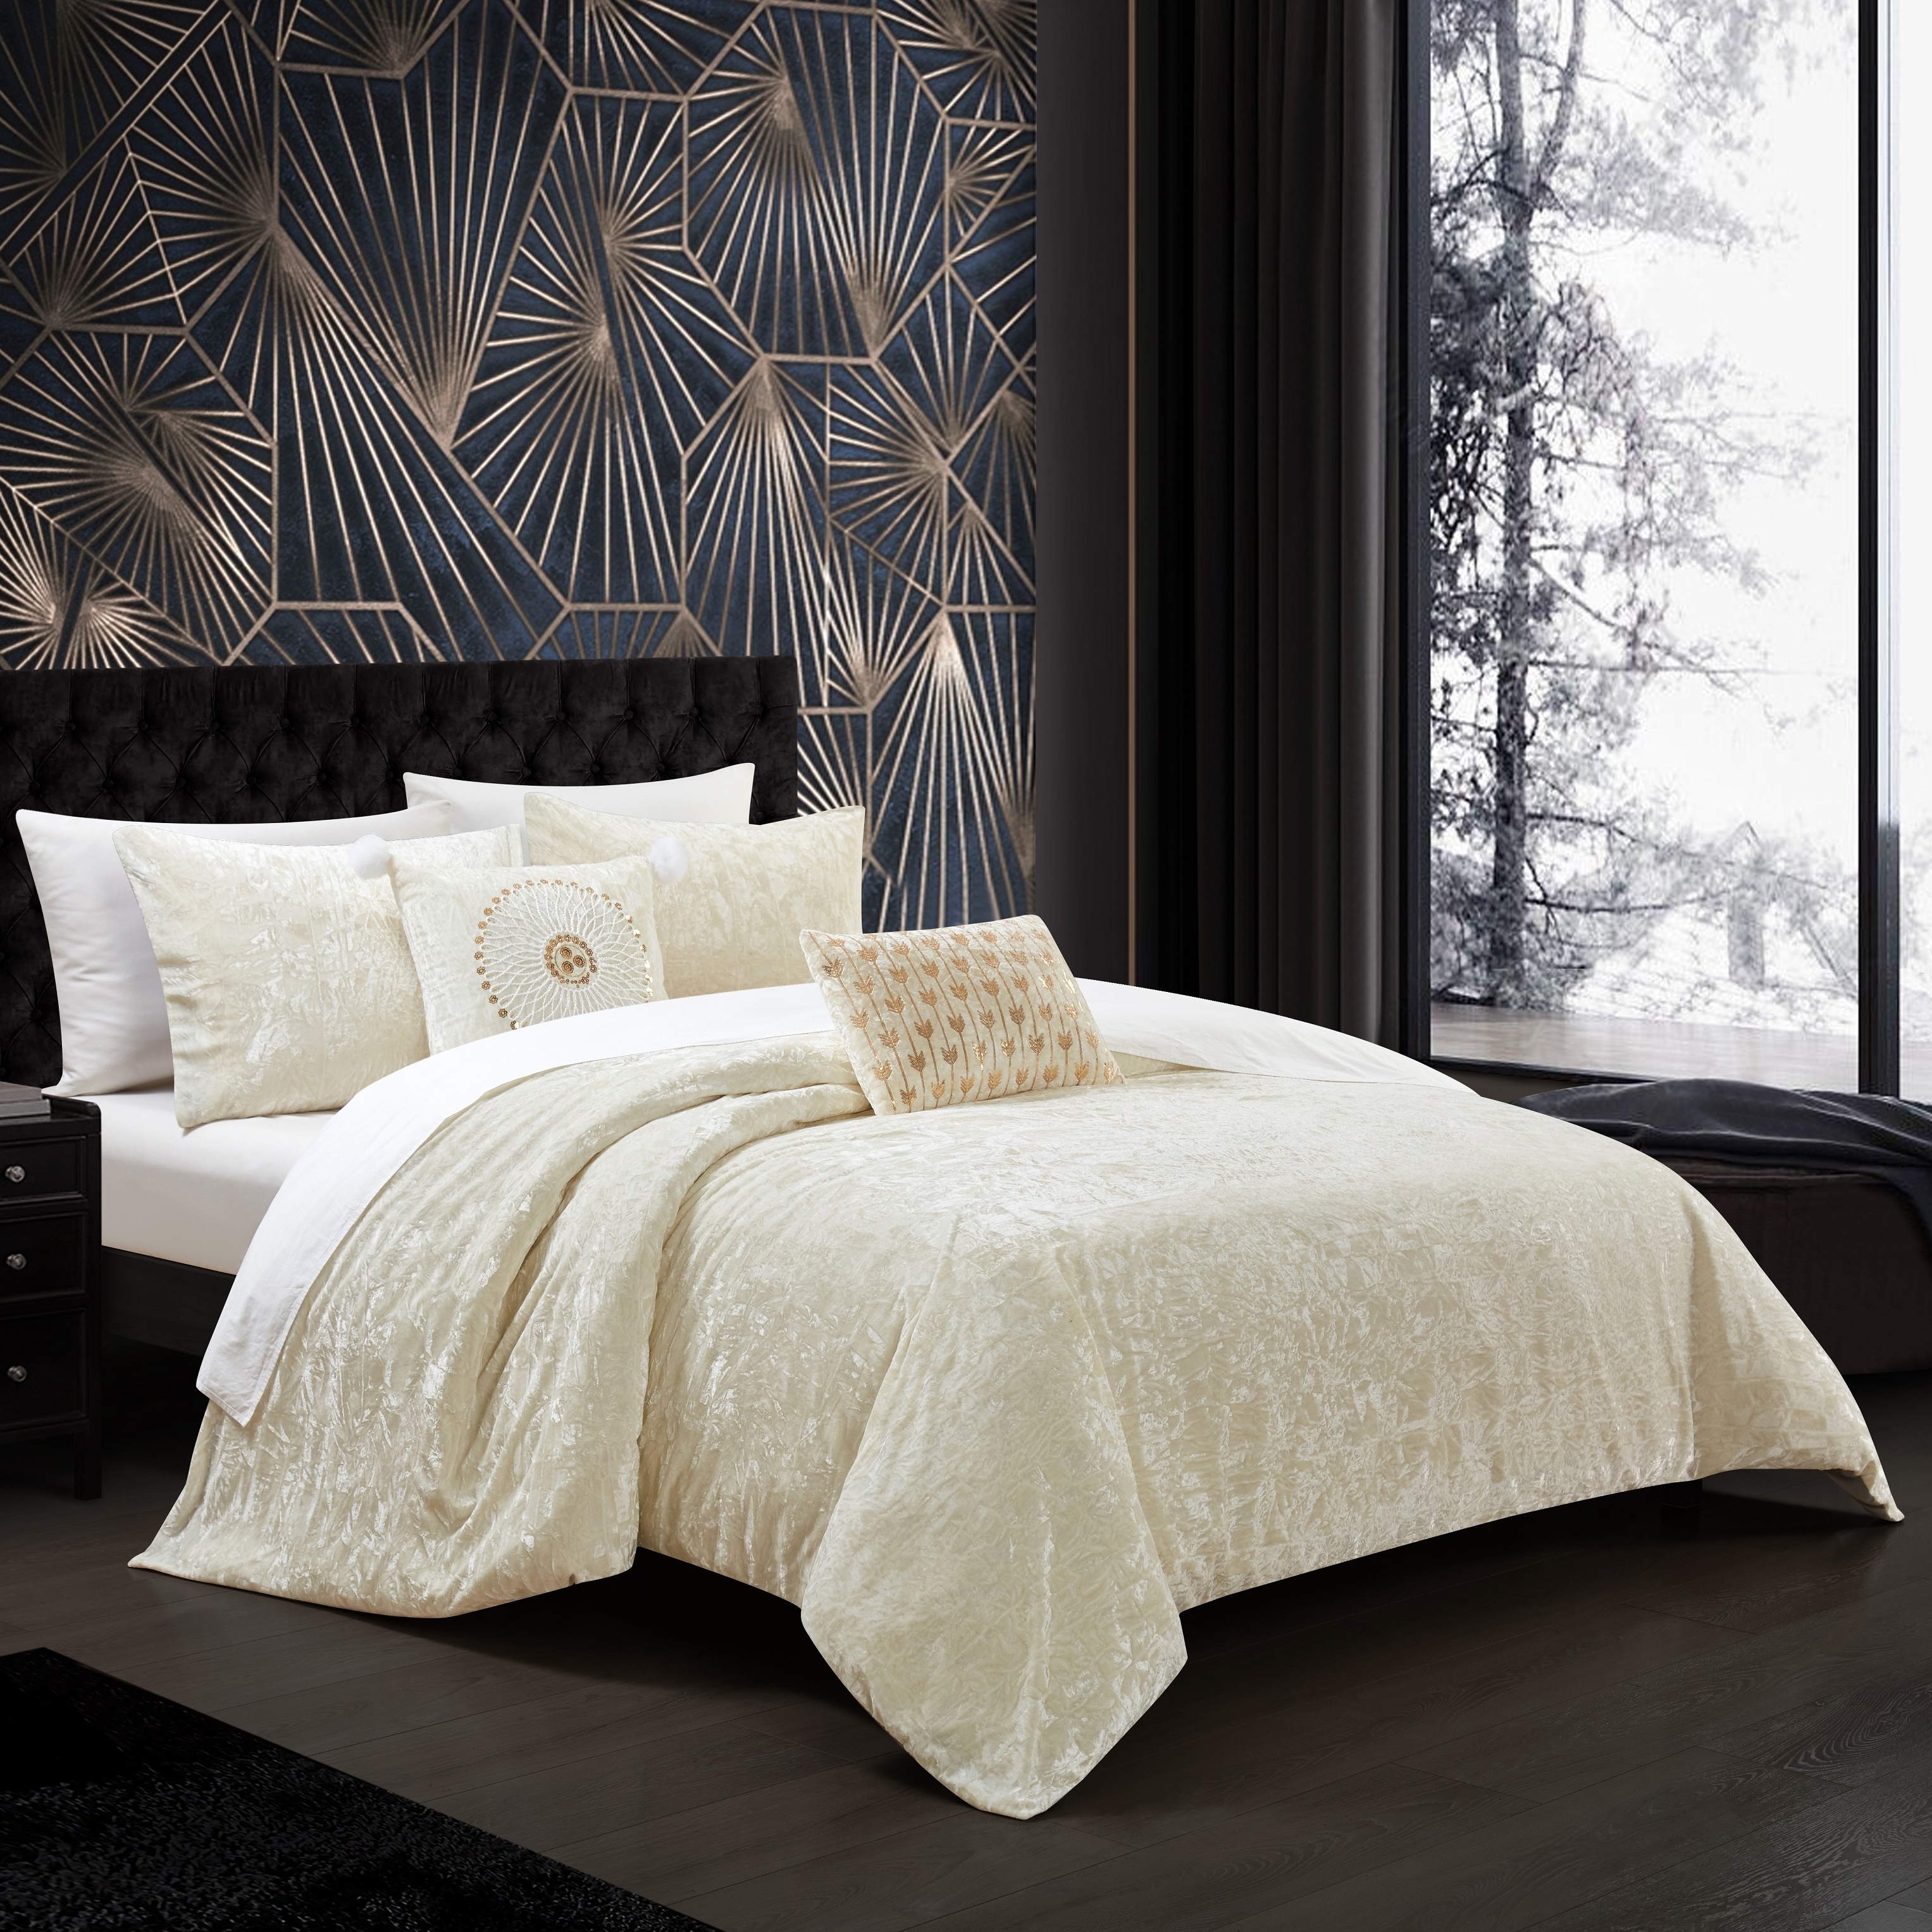 Giuliana 5 Piece Comforter Set Crinkle Crushed Velvet Bedding - Beige, King